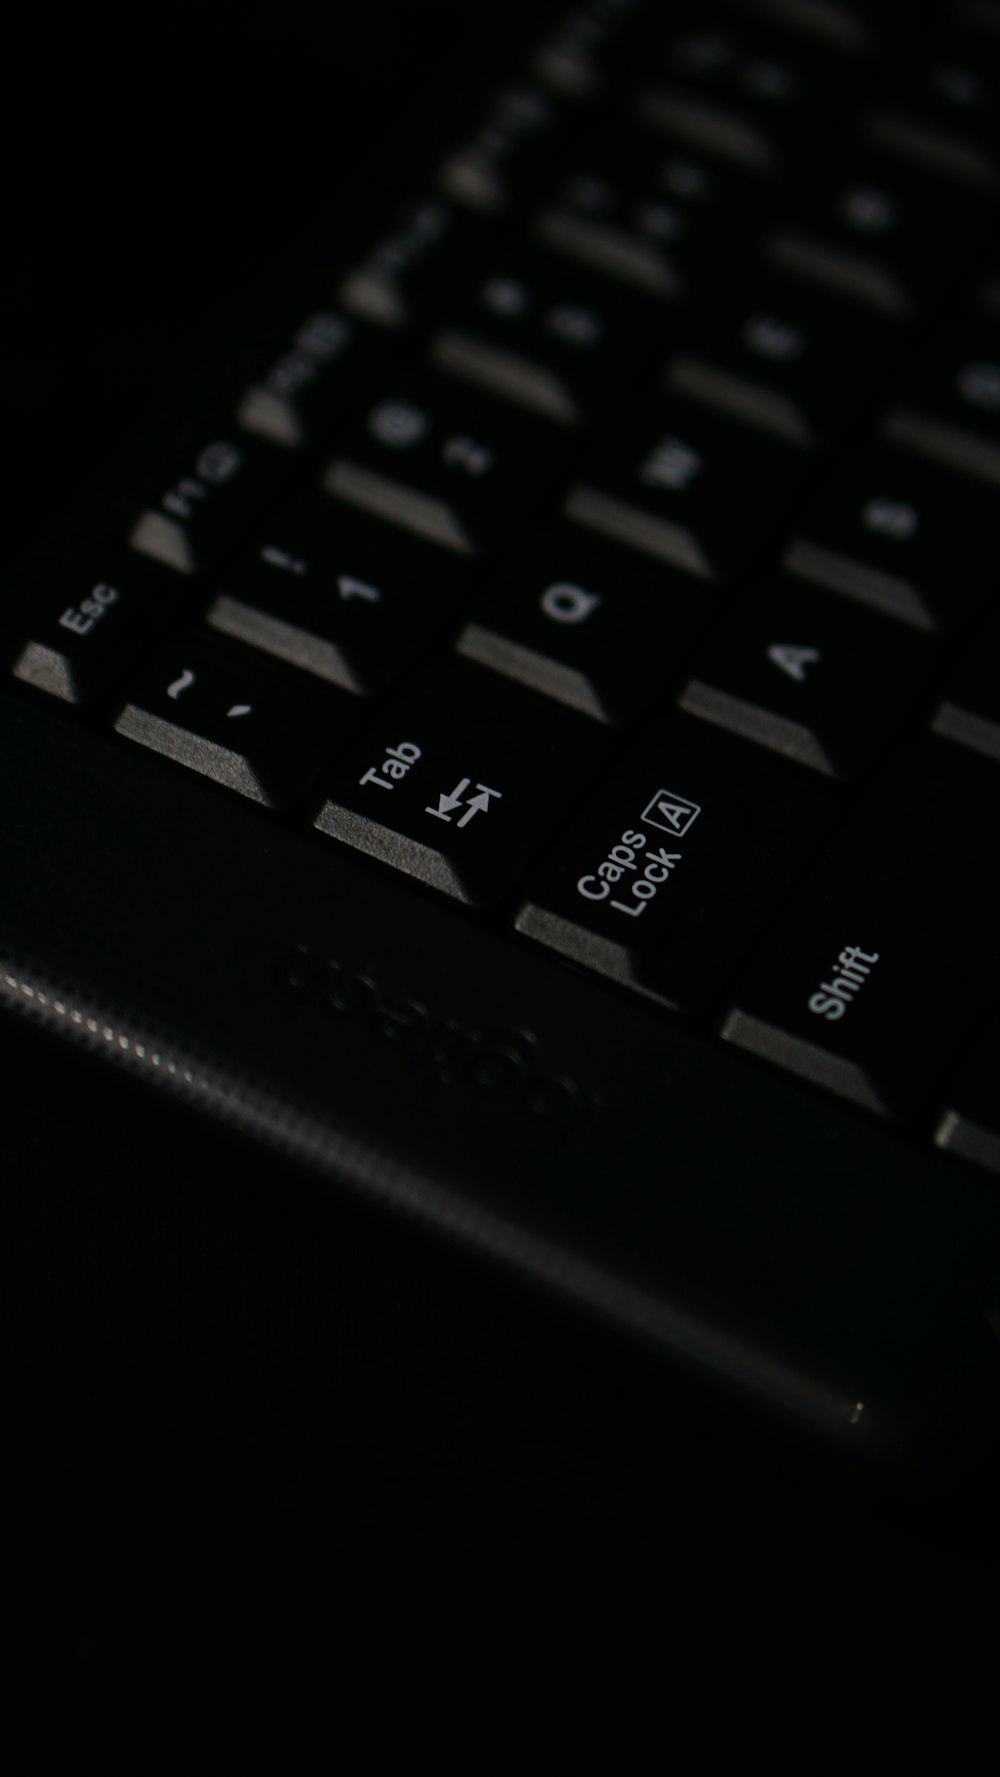 a close up of a black computer keyboard